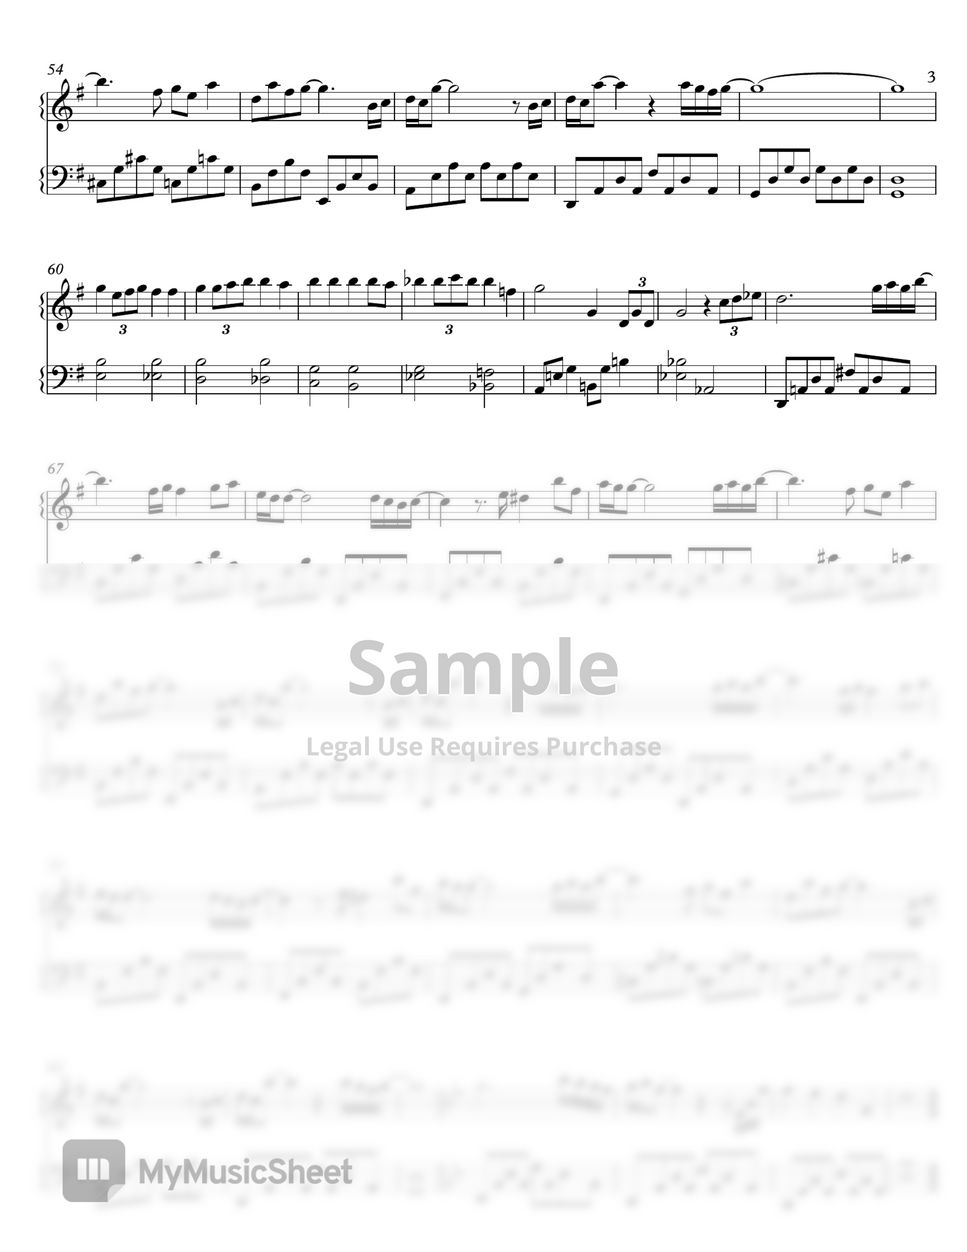 Baka Mitai Sheet Music - 5 Arrangements Available Instantly